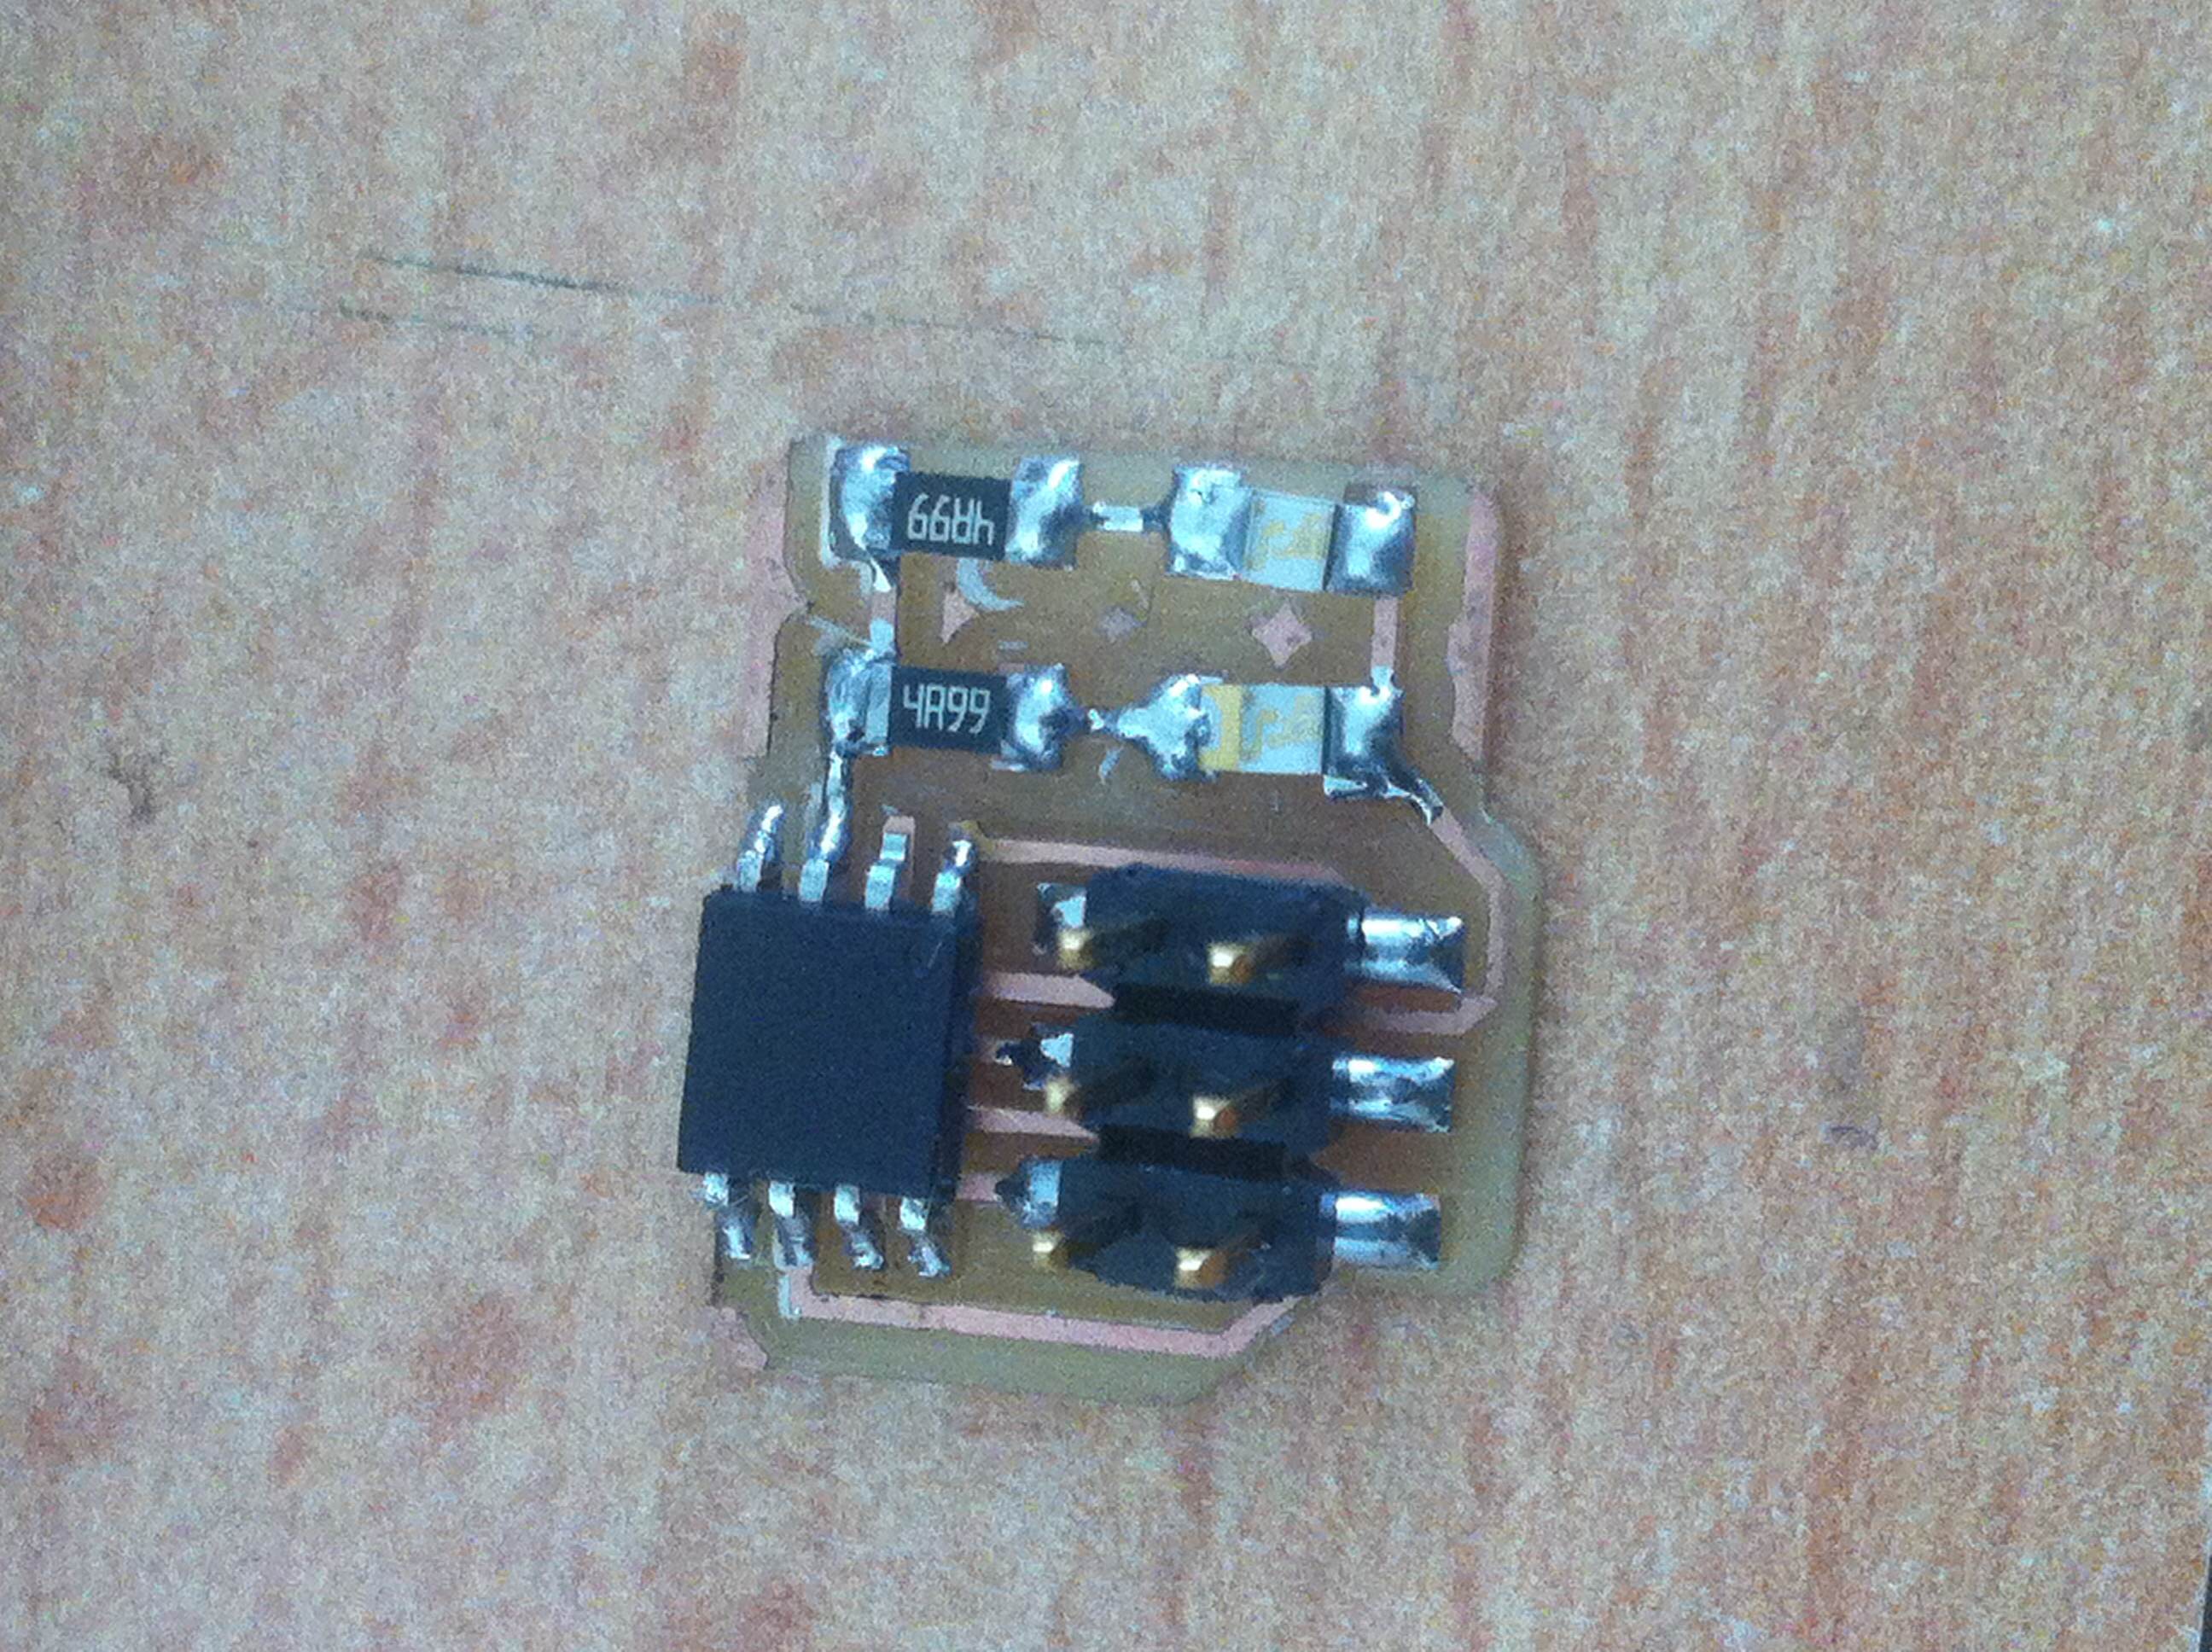 Img: Attiny45 soldered